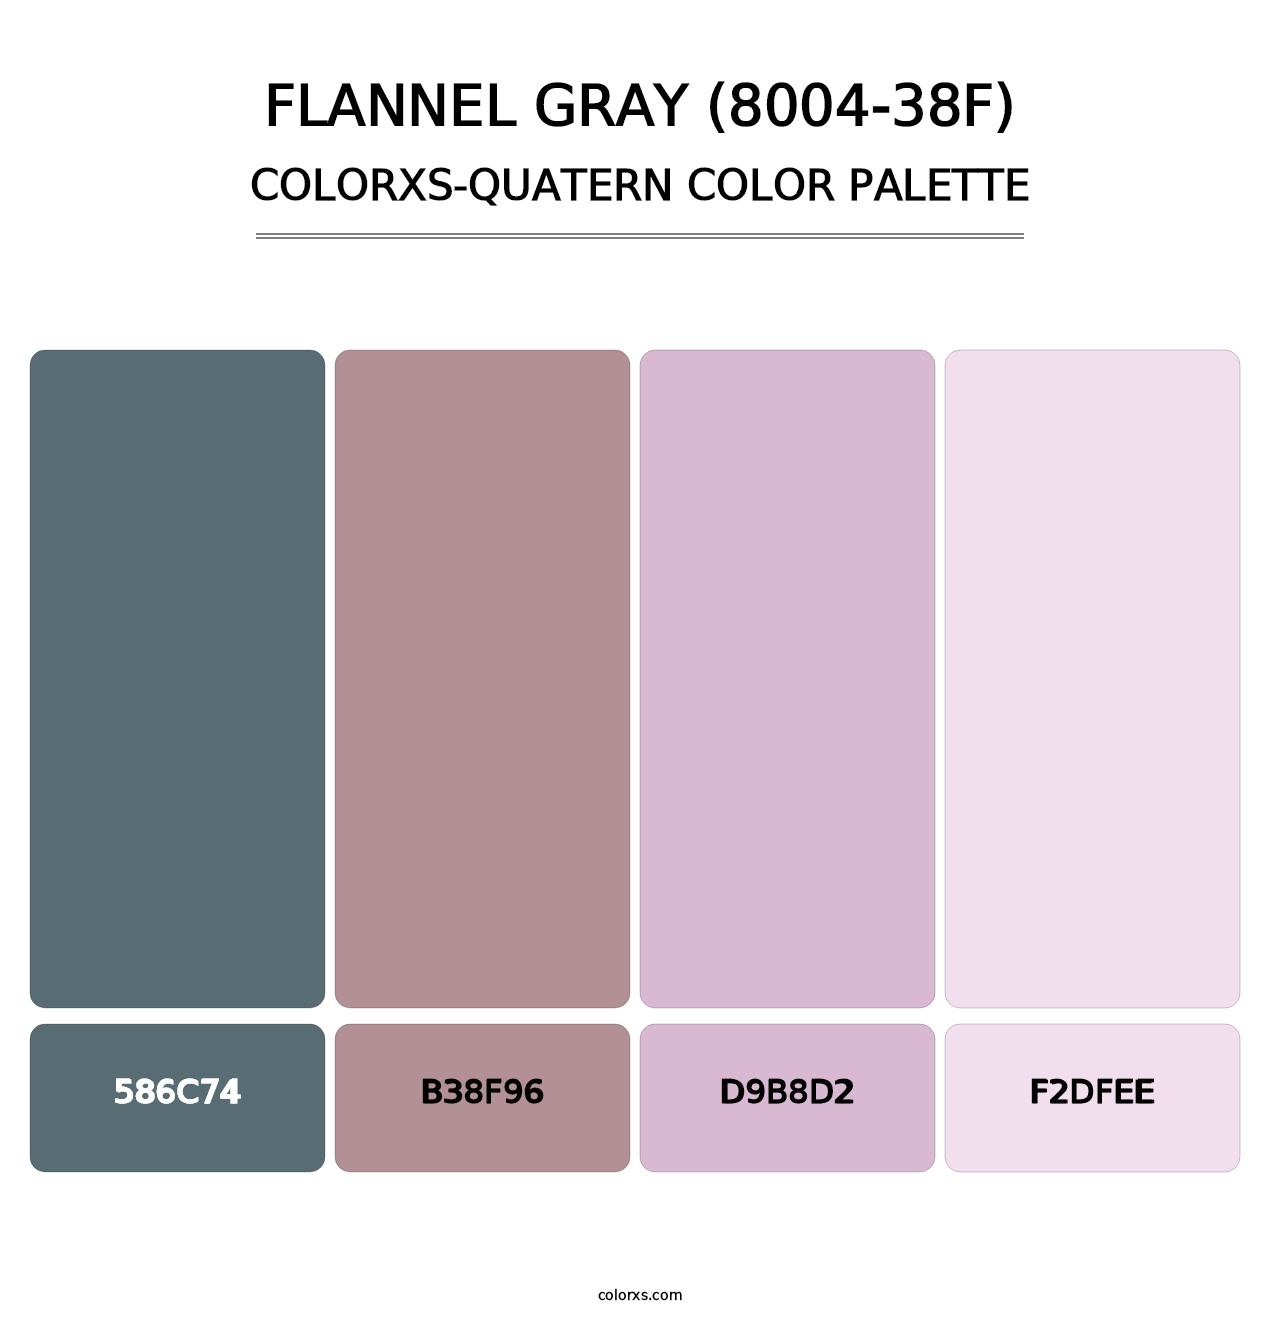 Flannel Gray (8004-38F) - Colorxs Quatern Palette